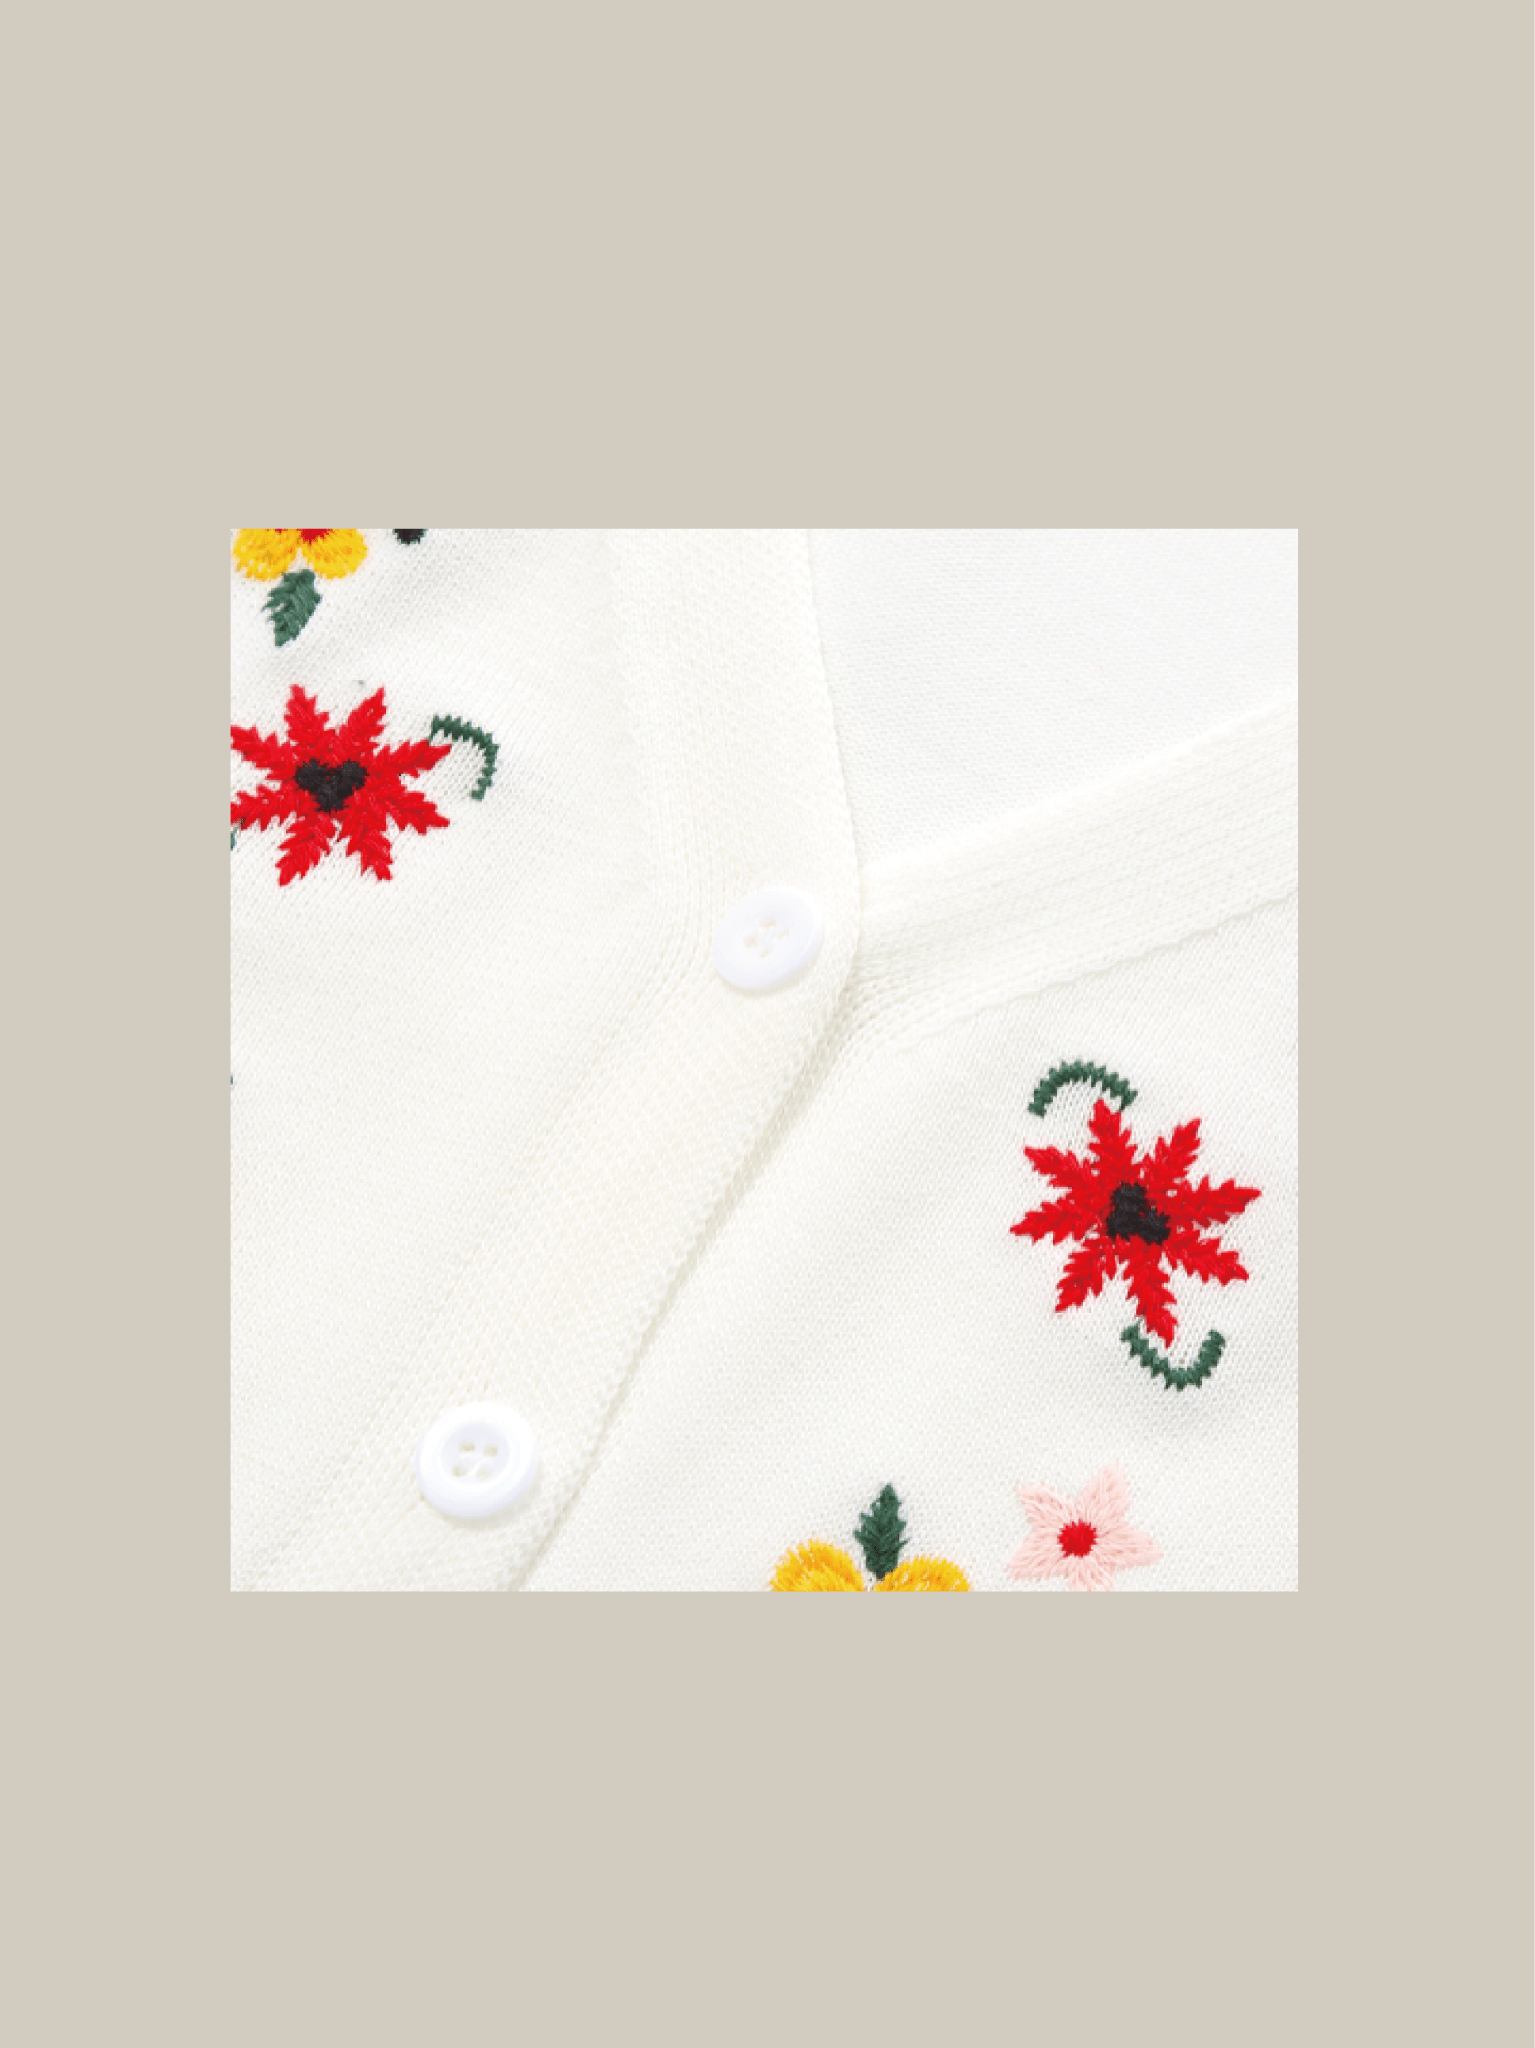 Flower Embroidery Half Knit - LOVE POMME POMME